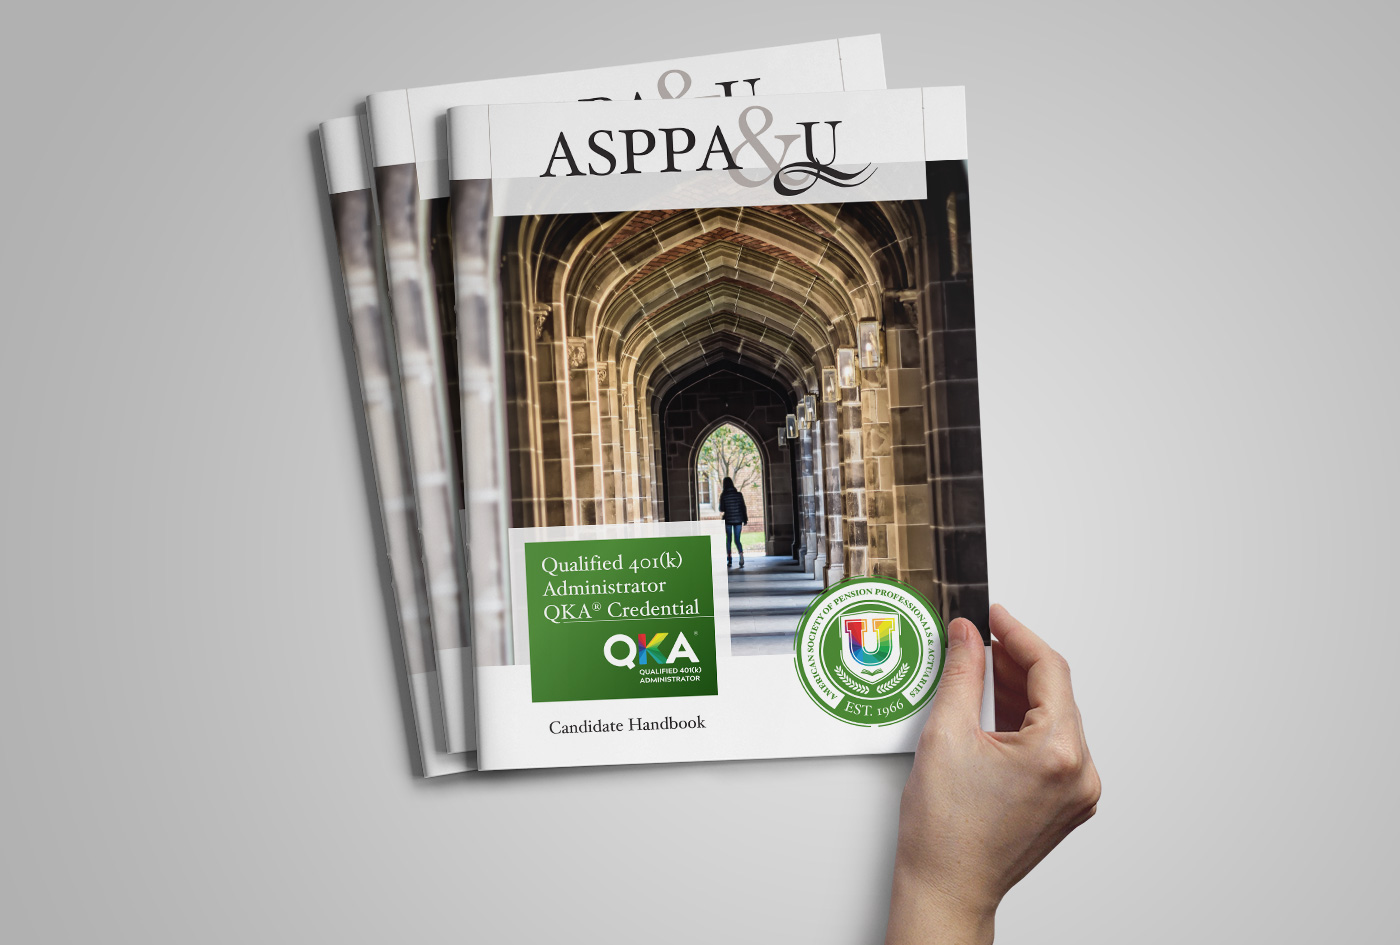 ASPPA&U Candidate Handbook